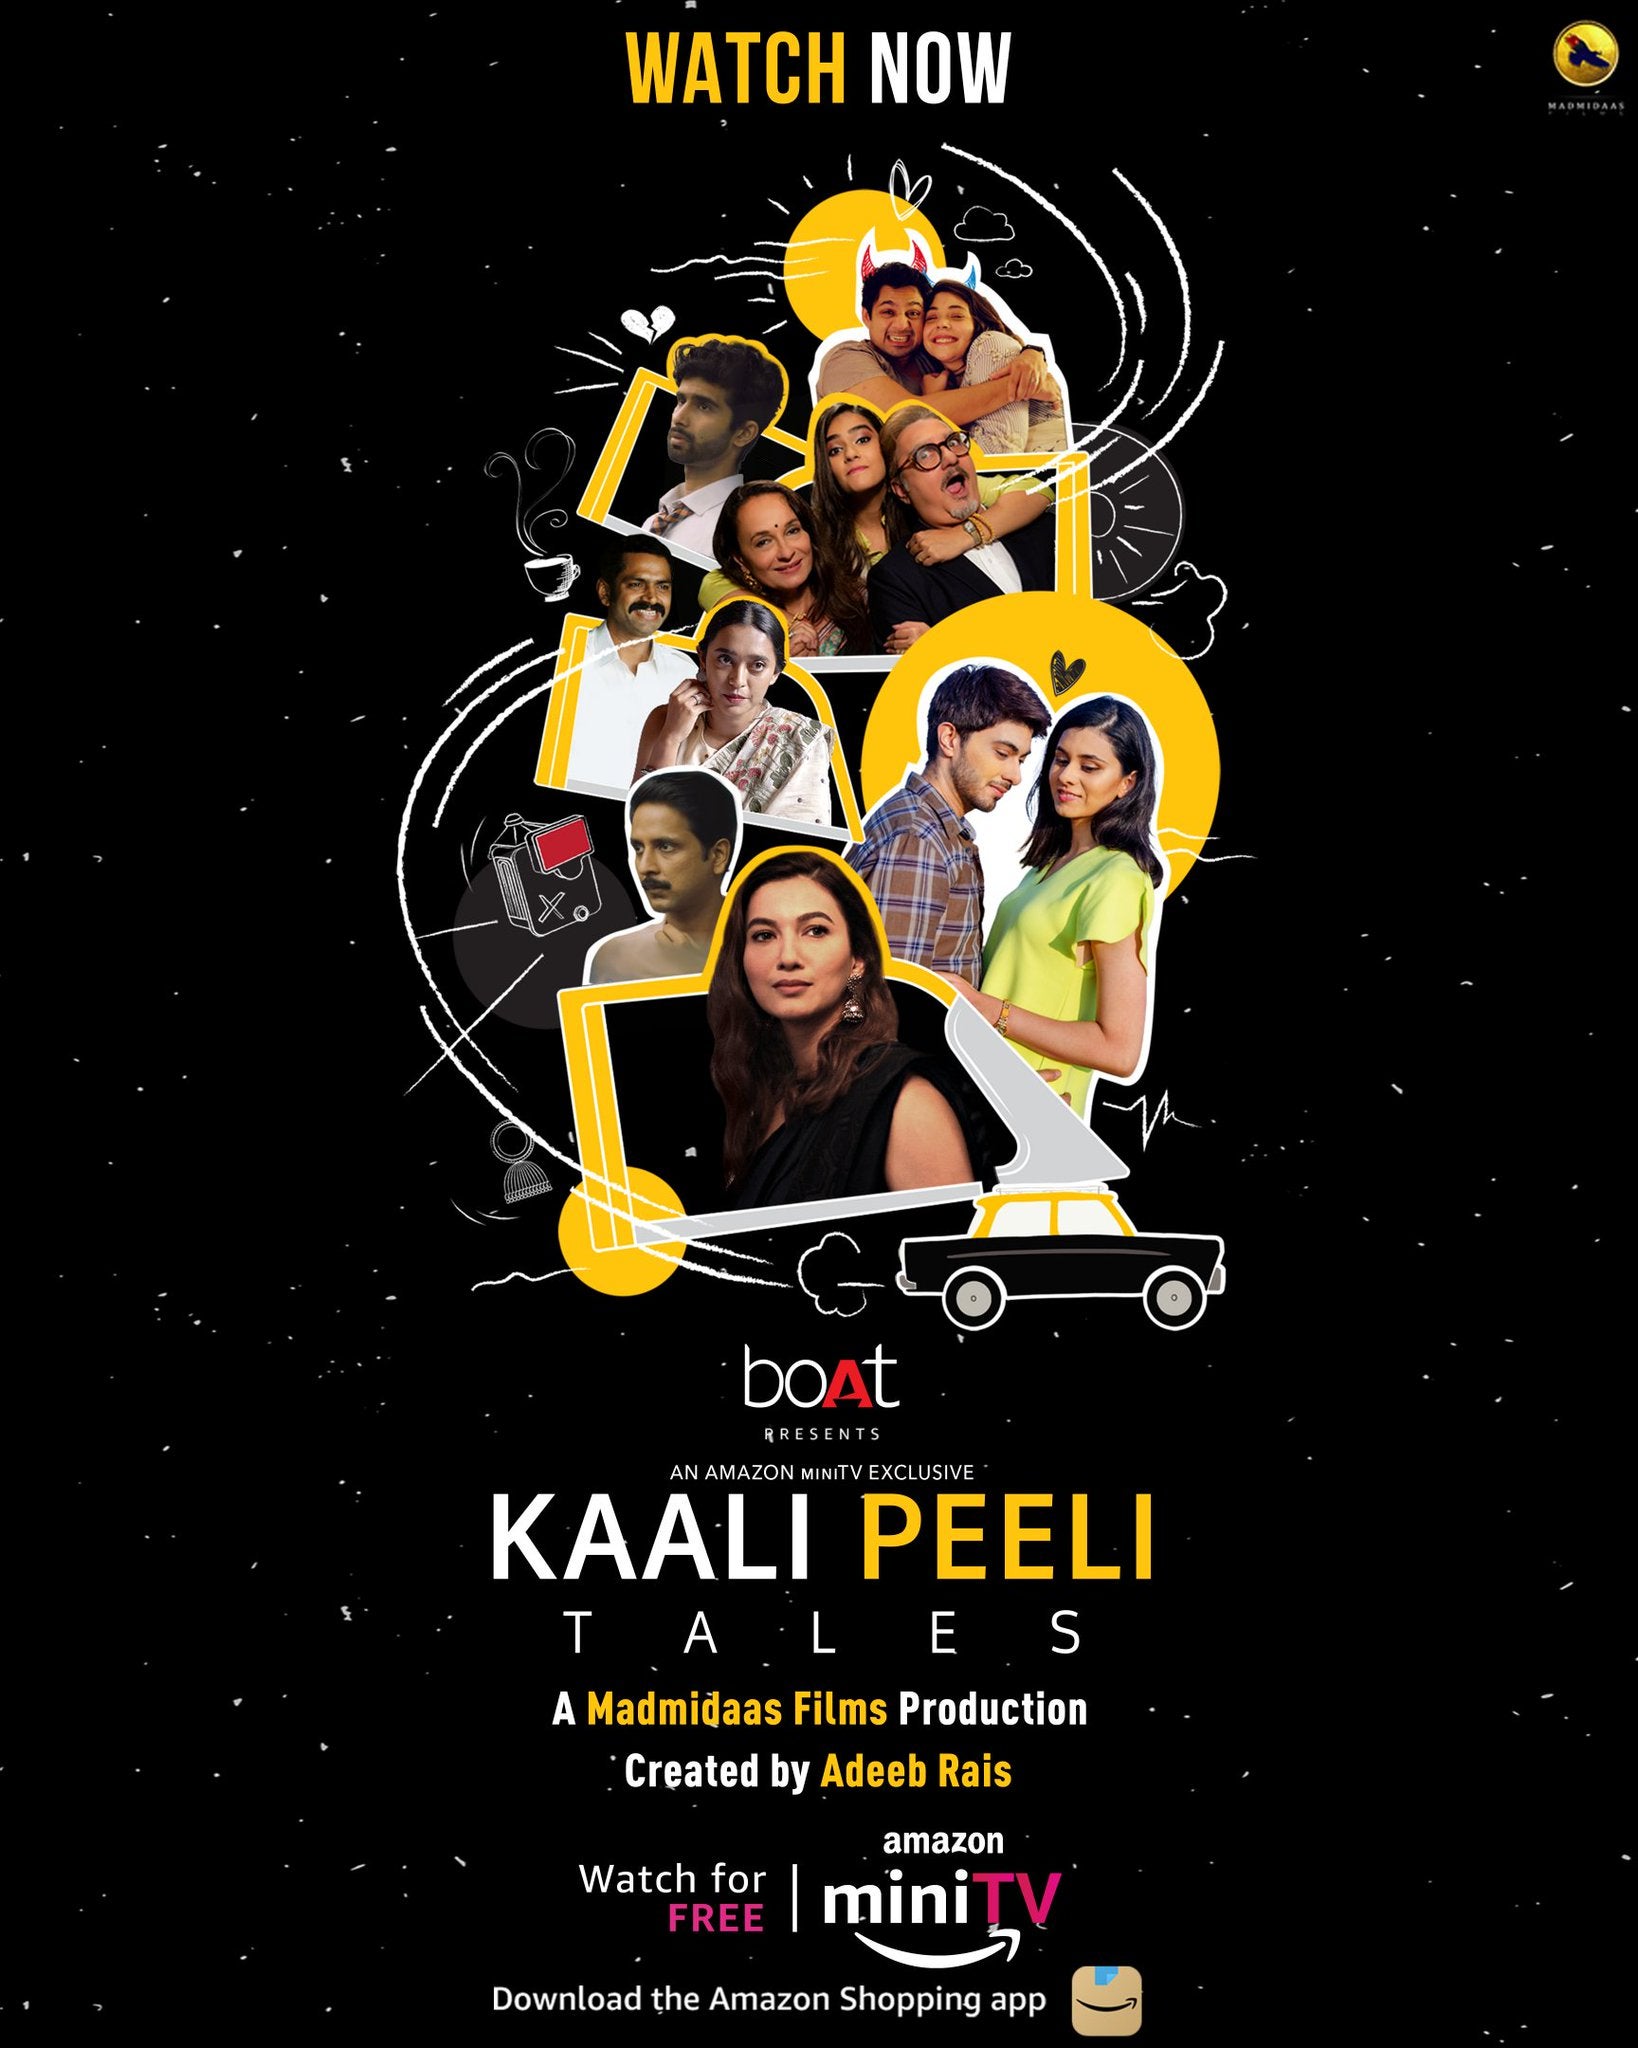 TV ratings for Kaali Peeli Tales in Russia. Amazon mini TV TV series